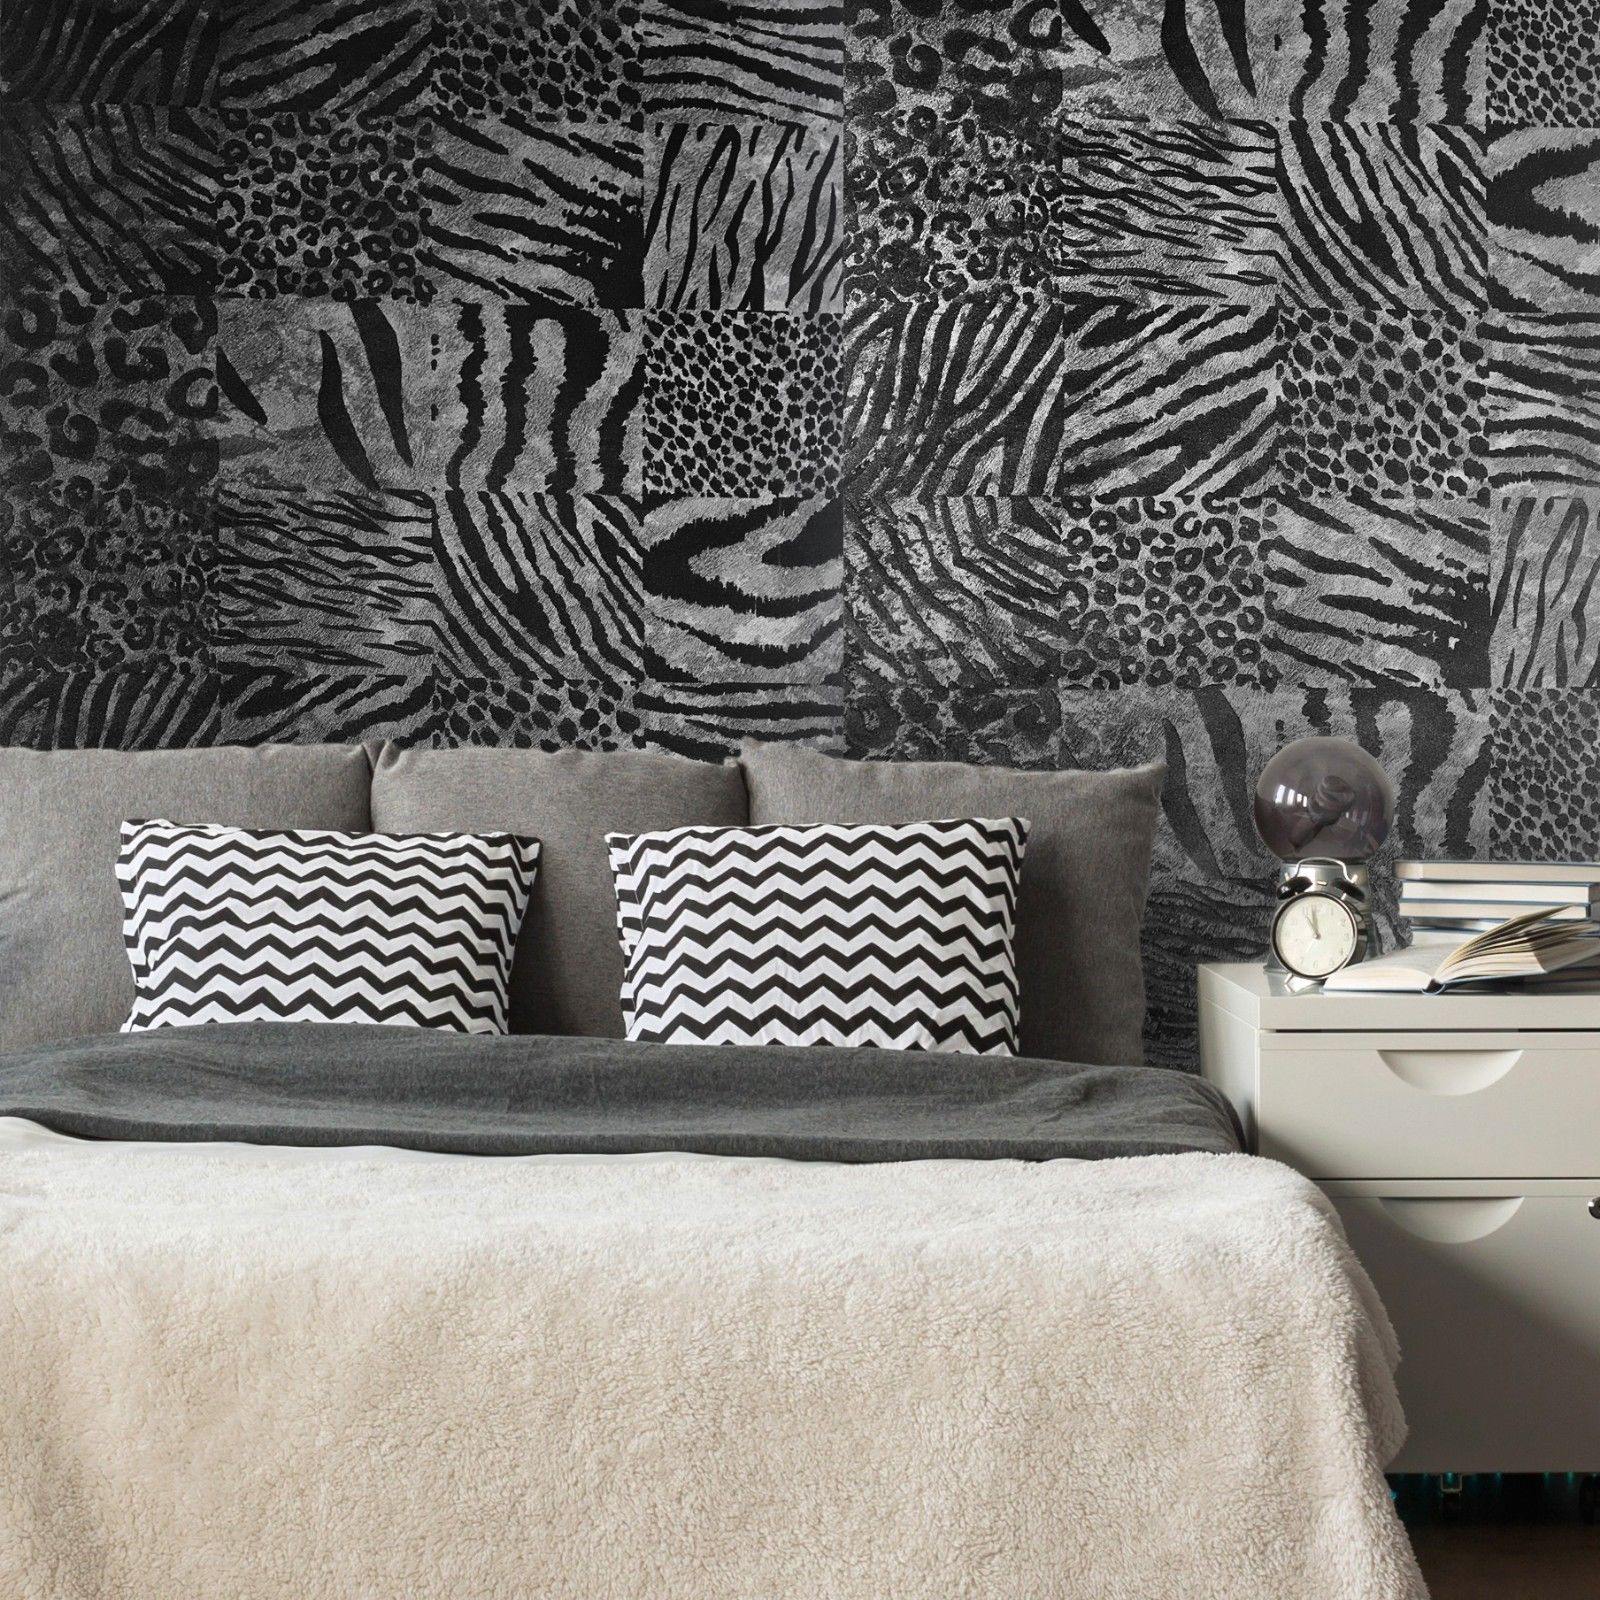 255050 Gray Silver Leopard Cheetah Wallpaper – wallcoveringsmart